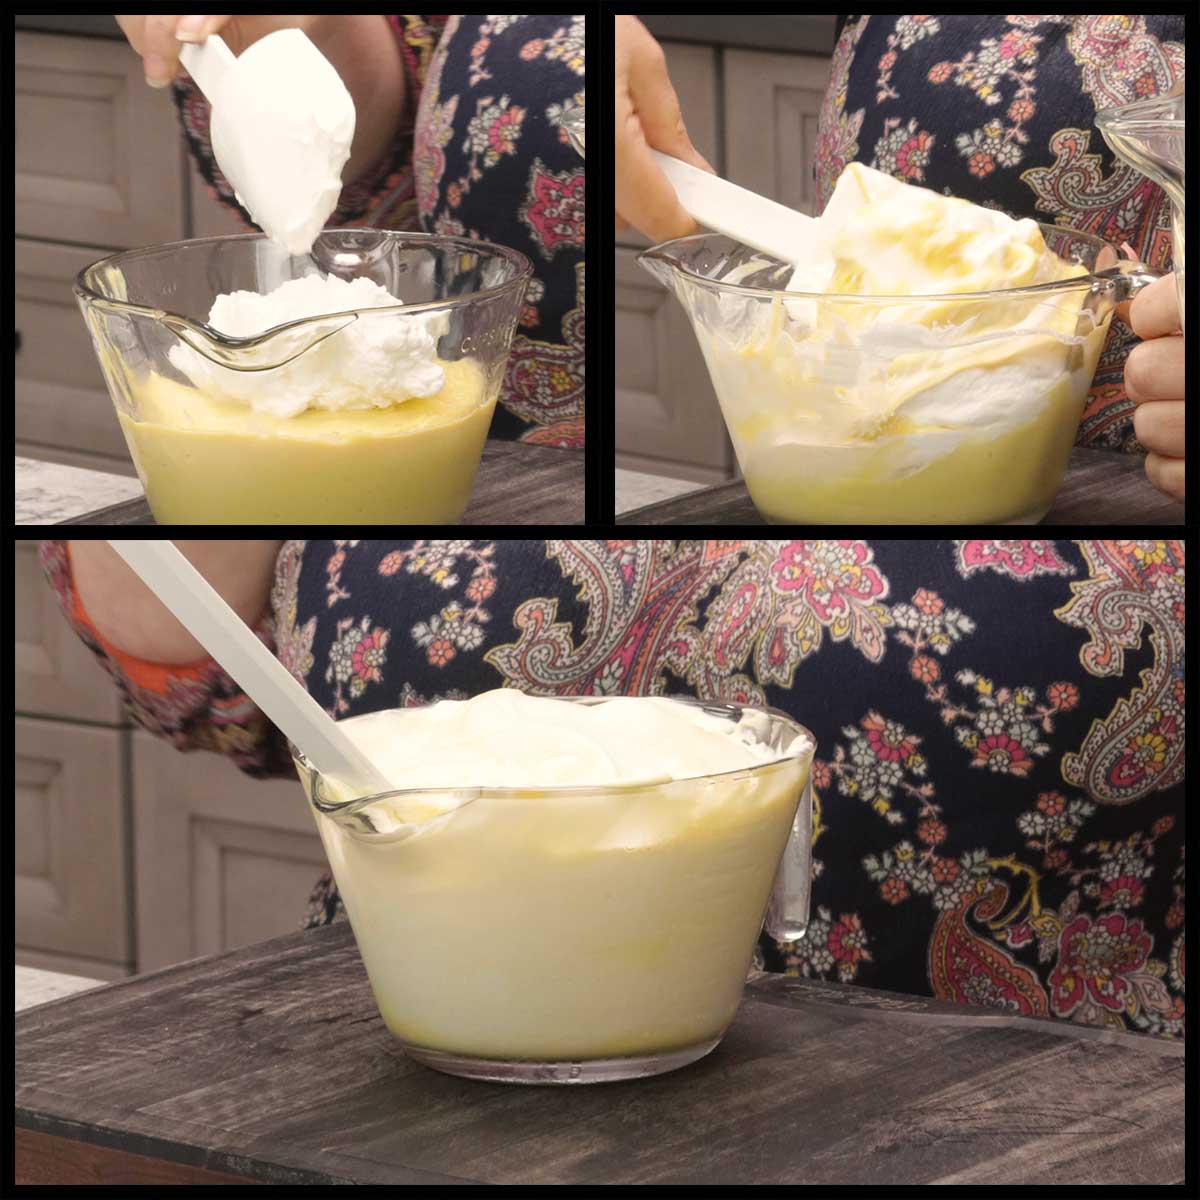 folding the whipped cream into the custard.